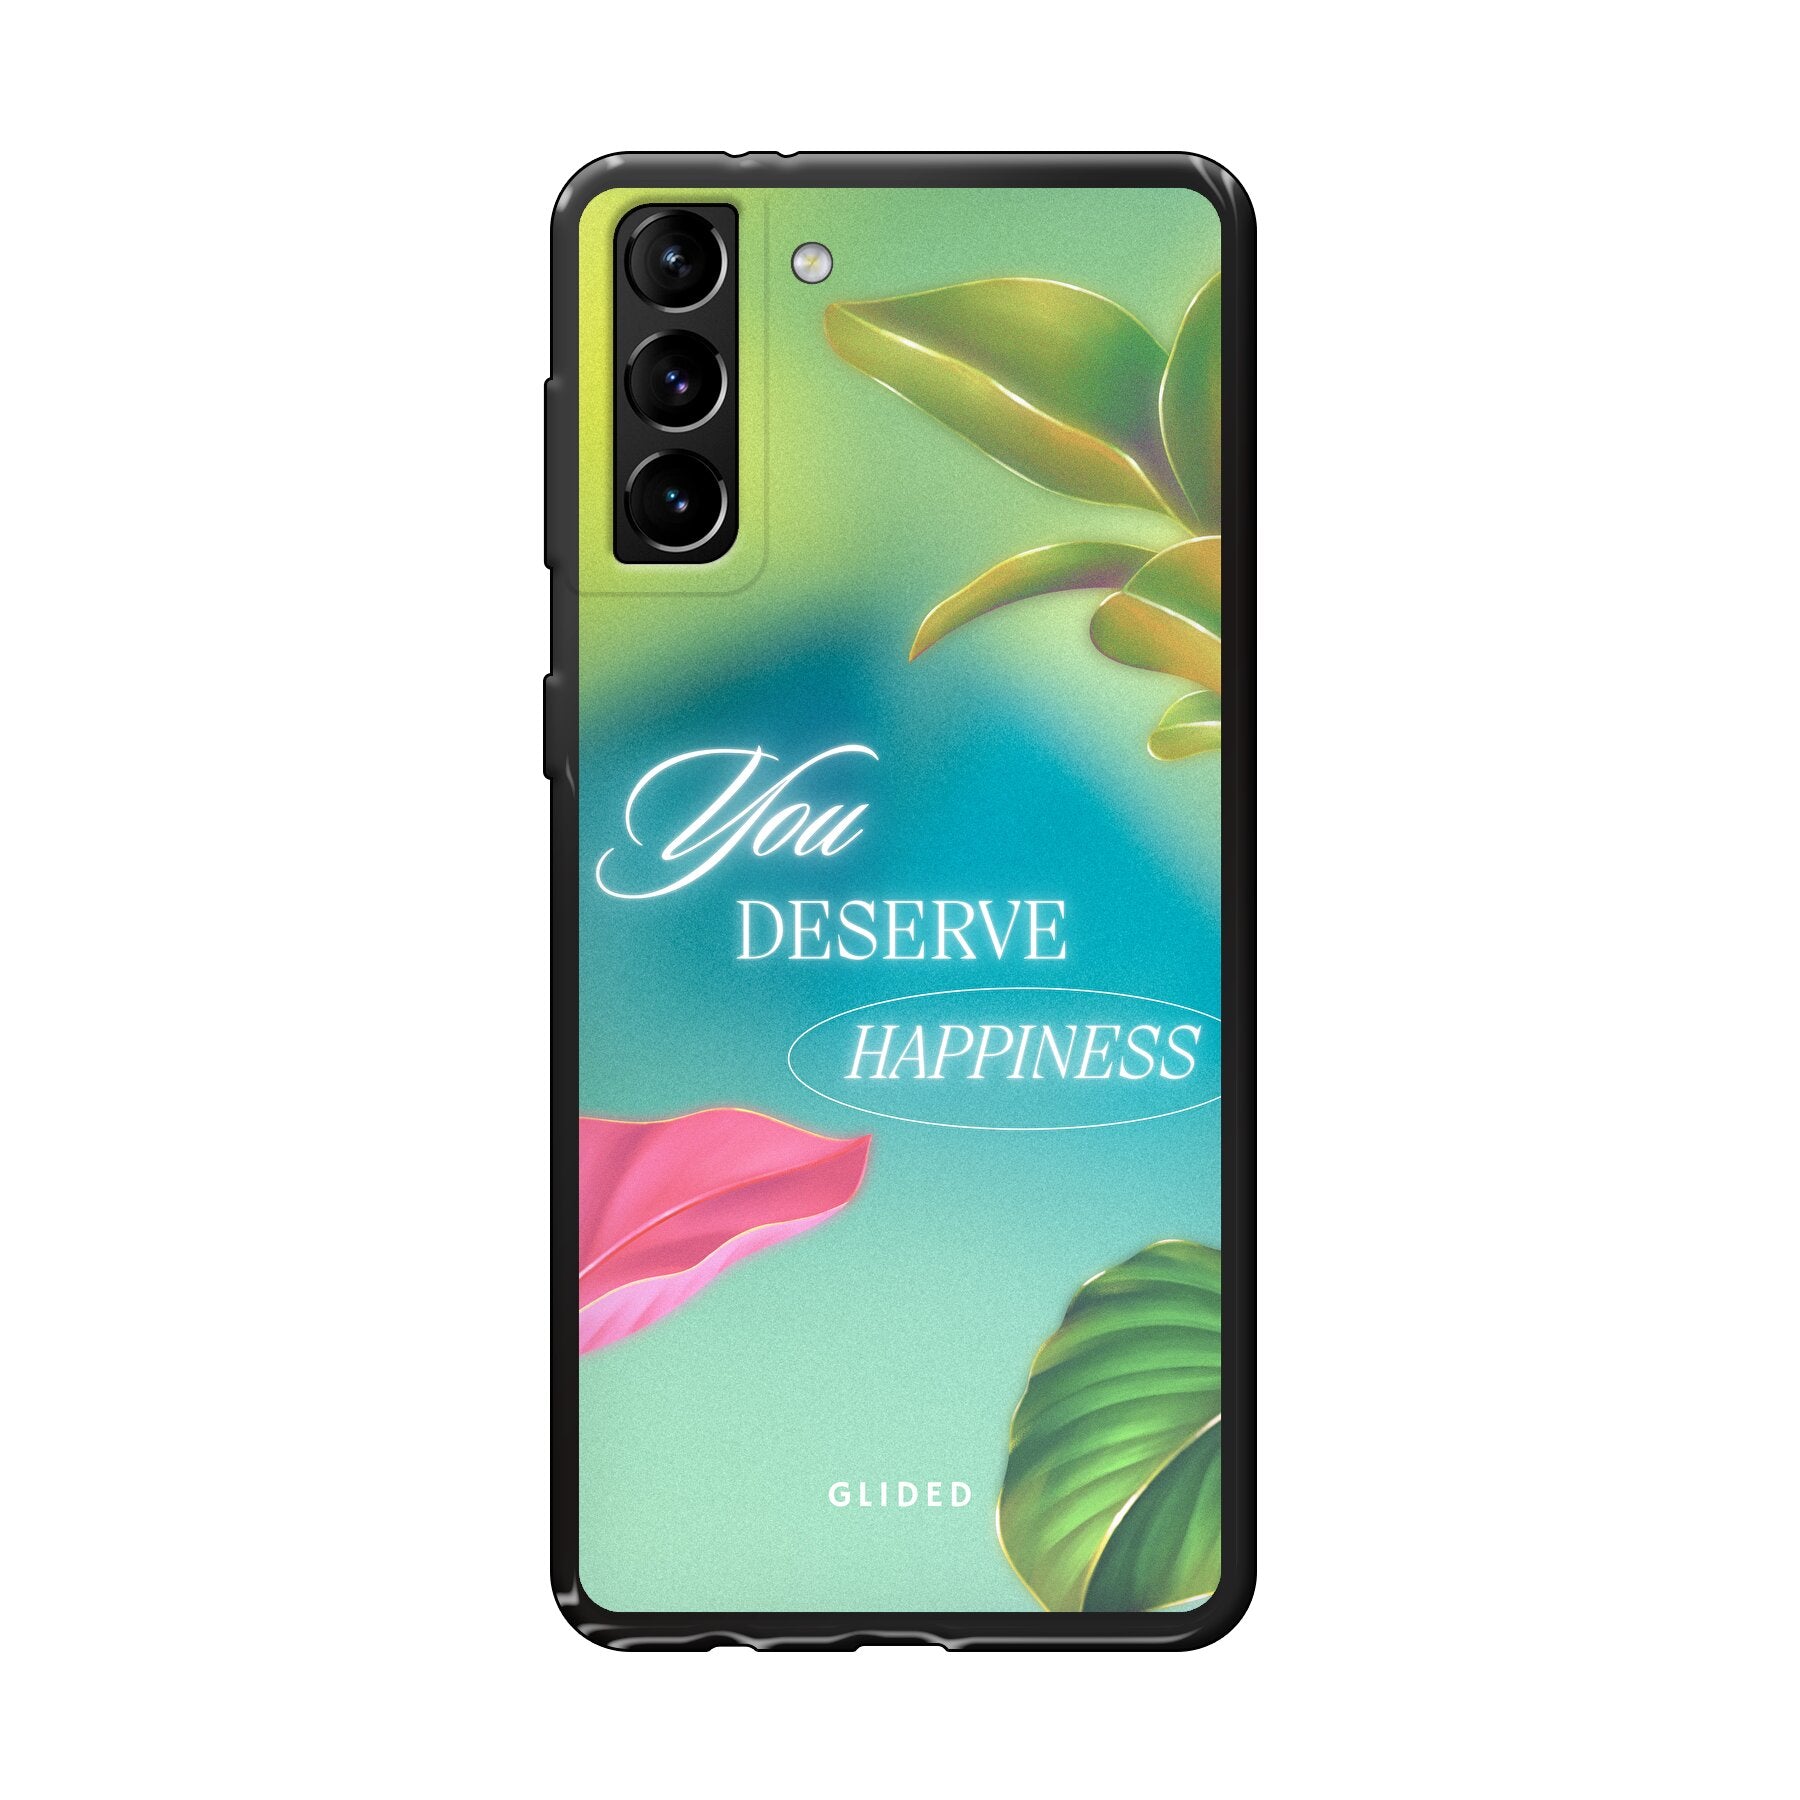 Happiness - Samsung Galaxy S21 Plus 5G - Soft case